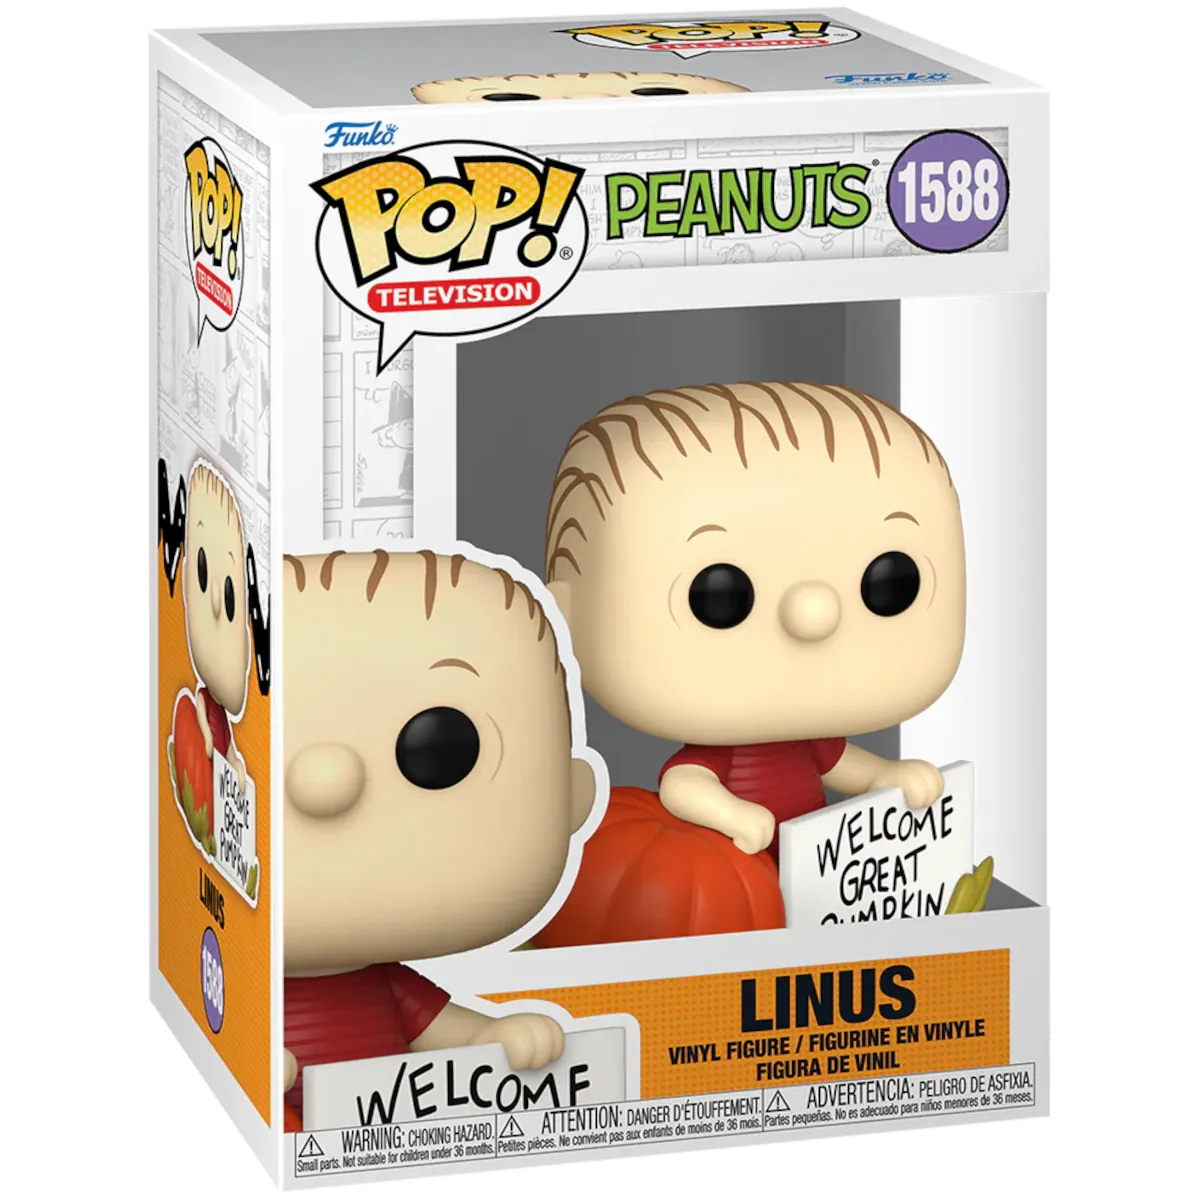 81368 Funko Pop! Television - Peanuts - Linus Collectable Vinyl Figure Box Front